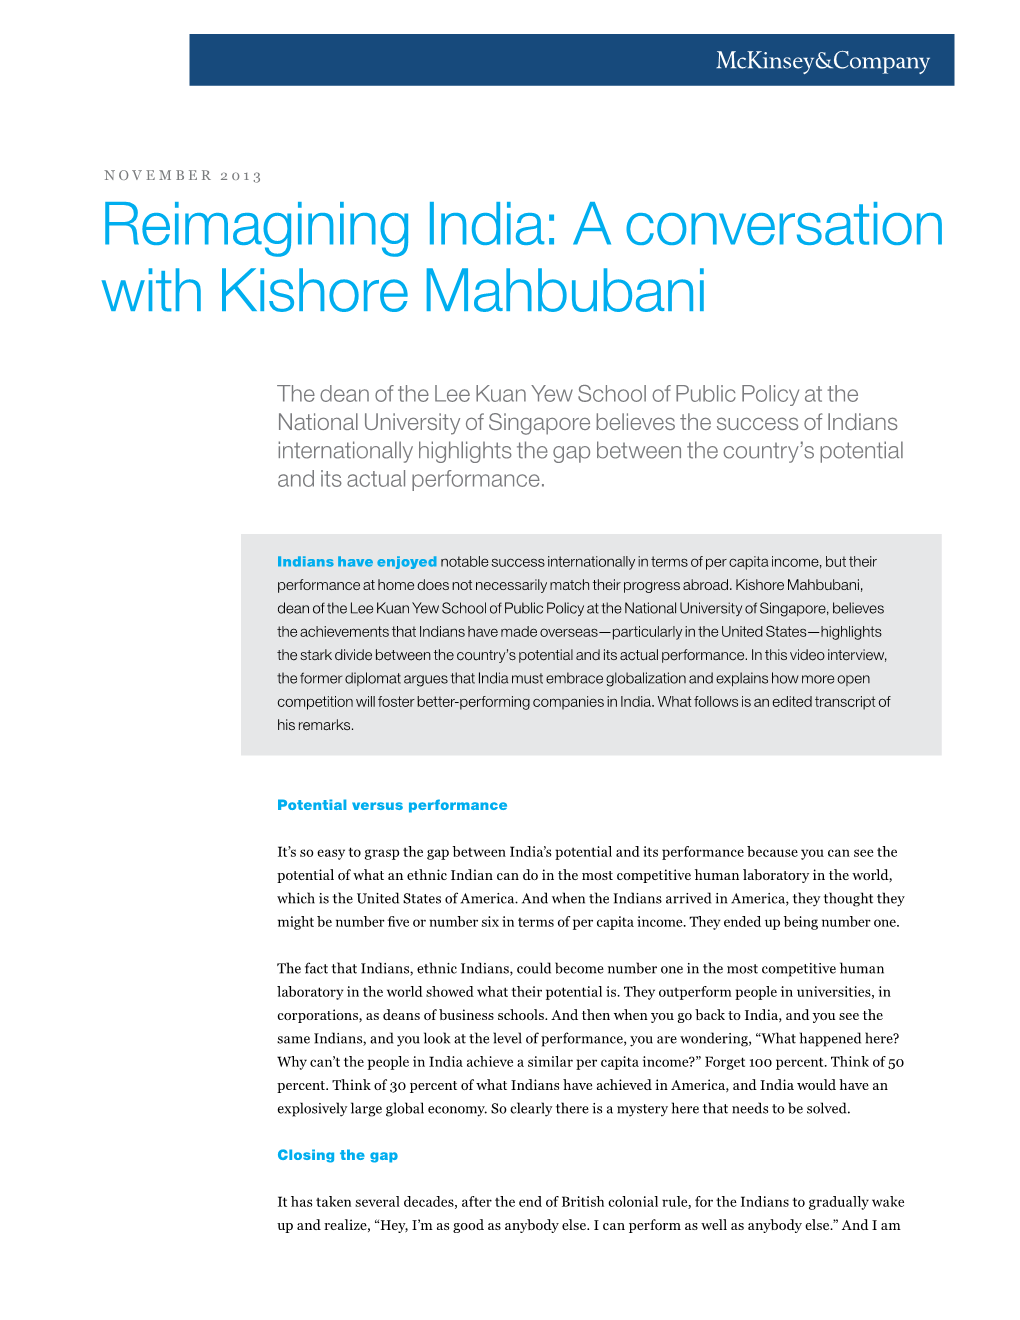 Reimagining India: a Conversation with Kishore Mahbubani